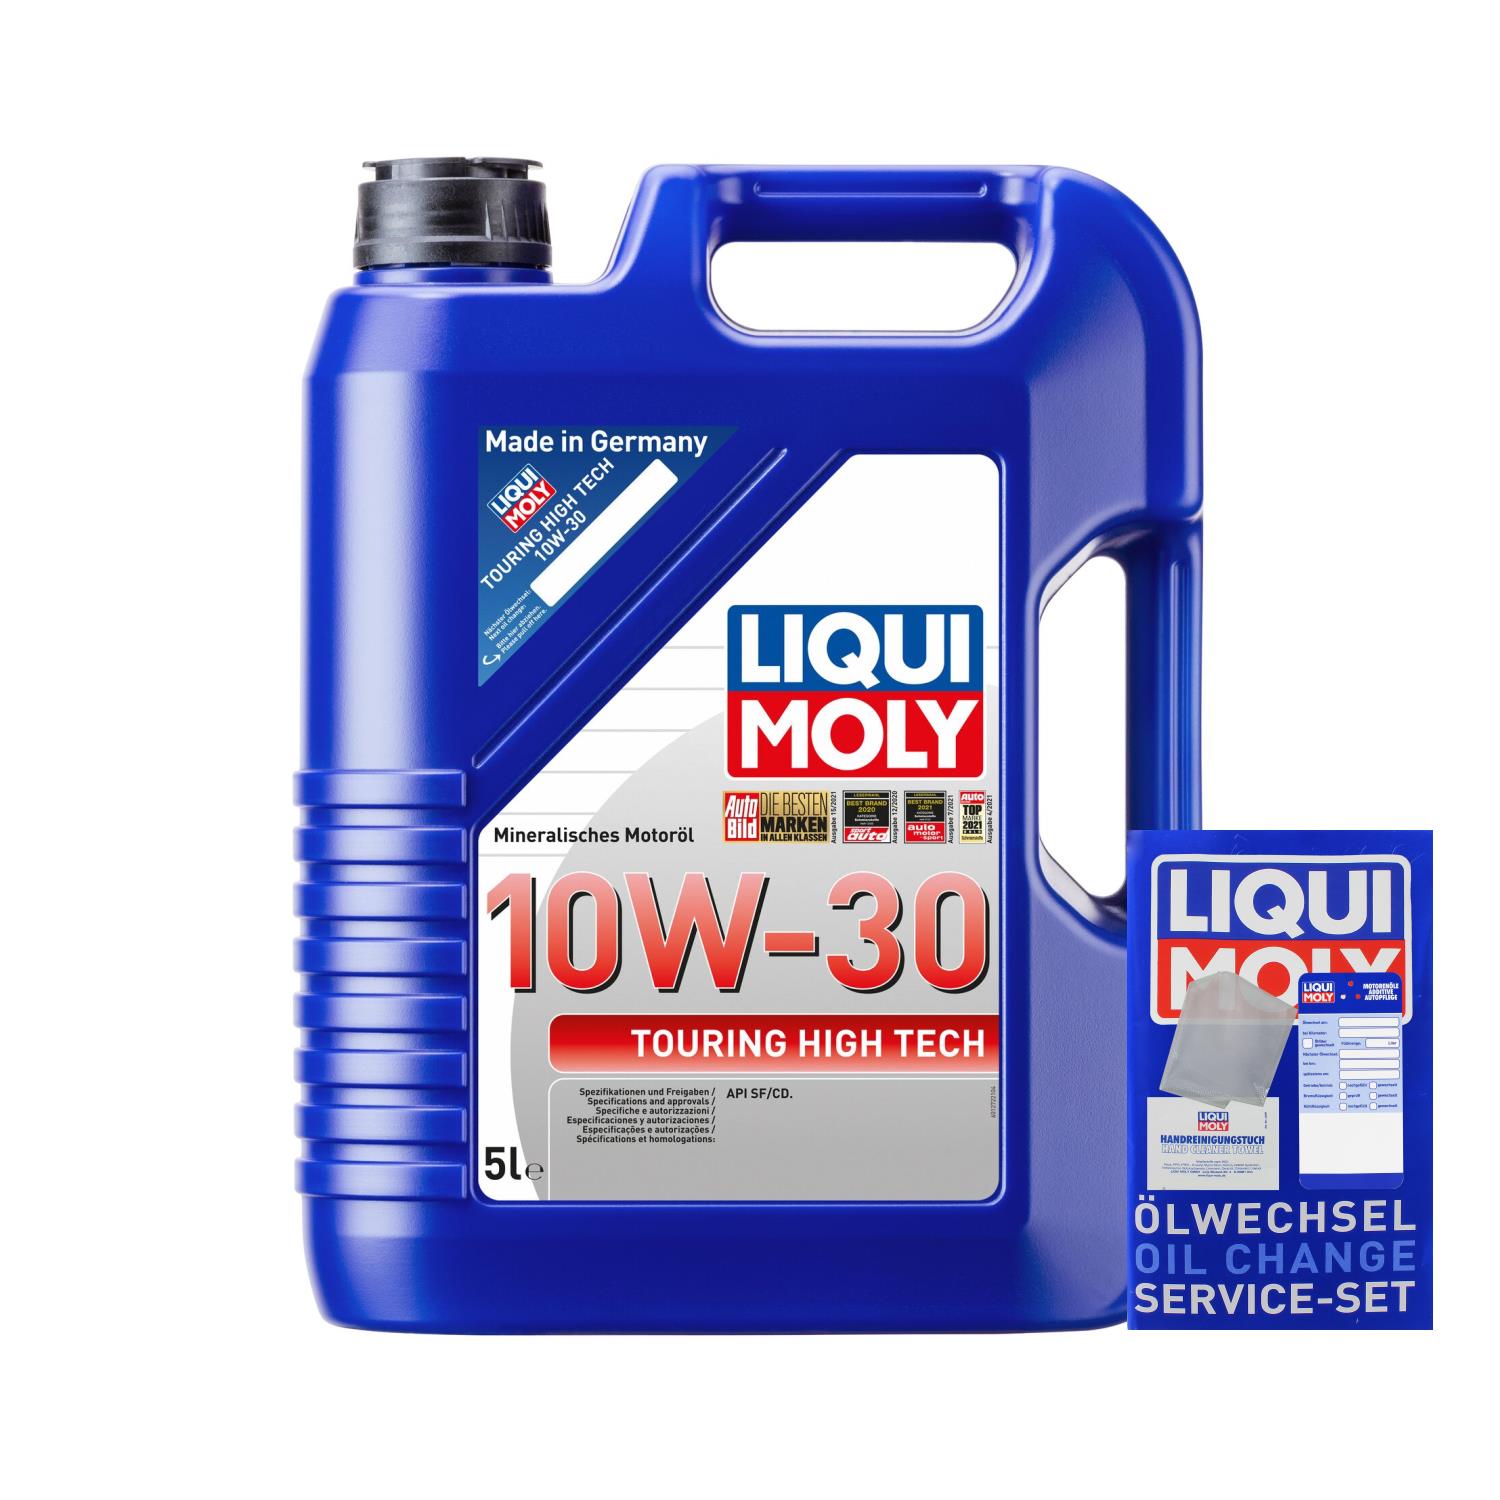 Liqui Moly Touring High Tech 10W-30 Mineralisches Motoröl API SF/CD 5L